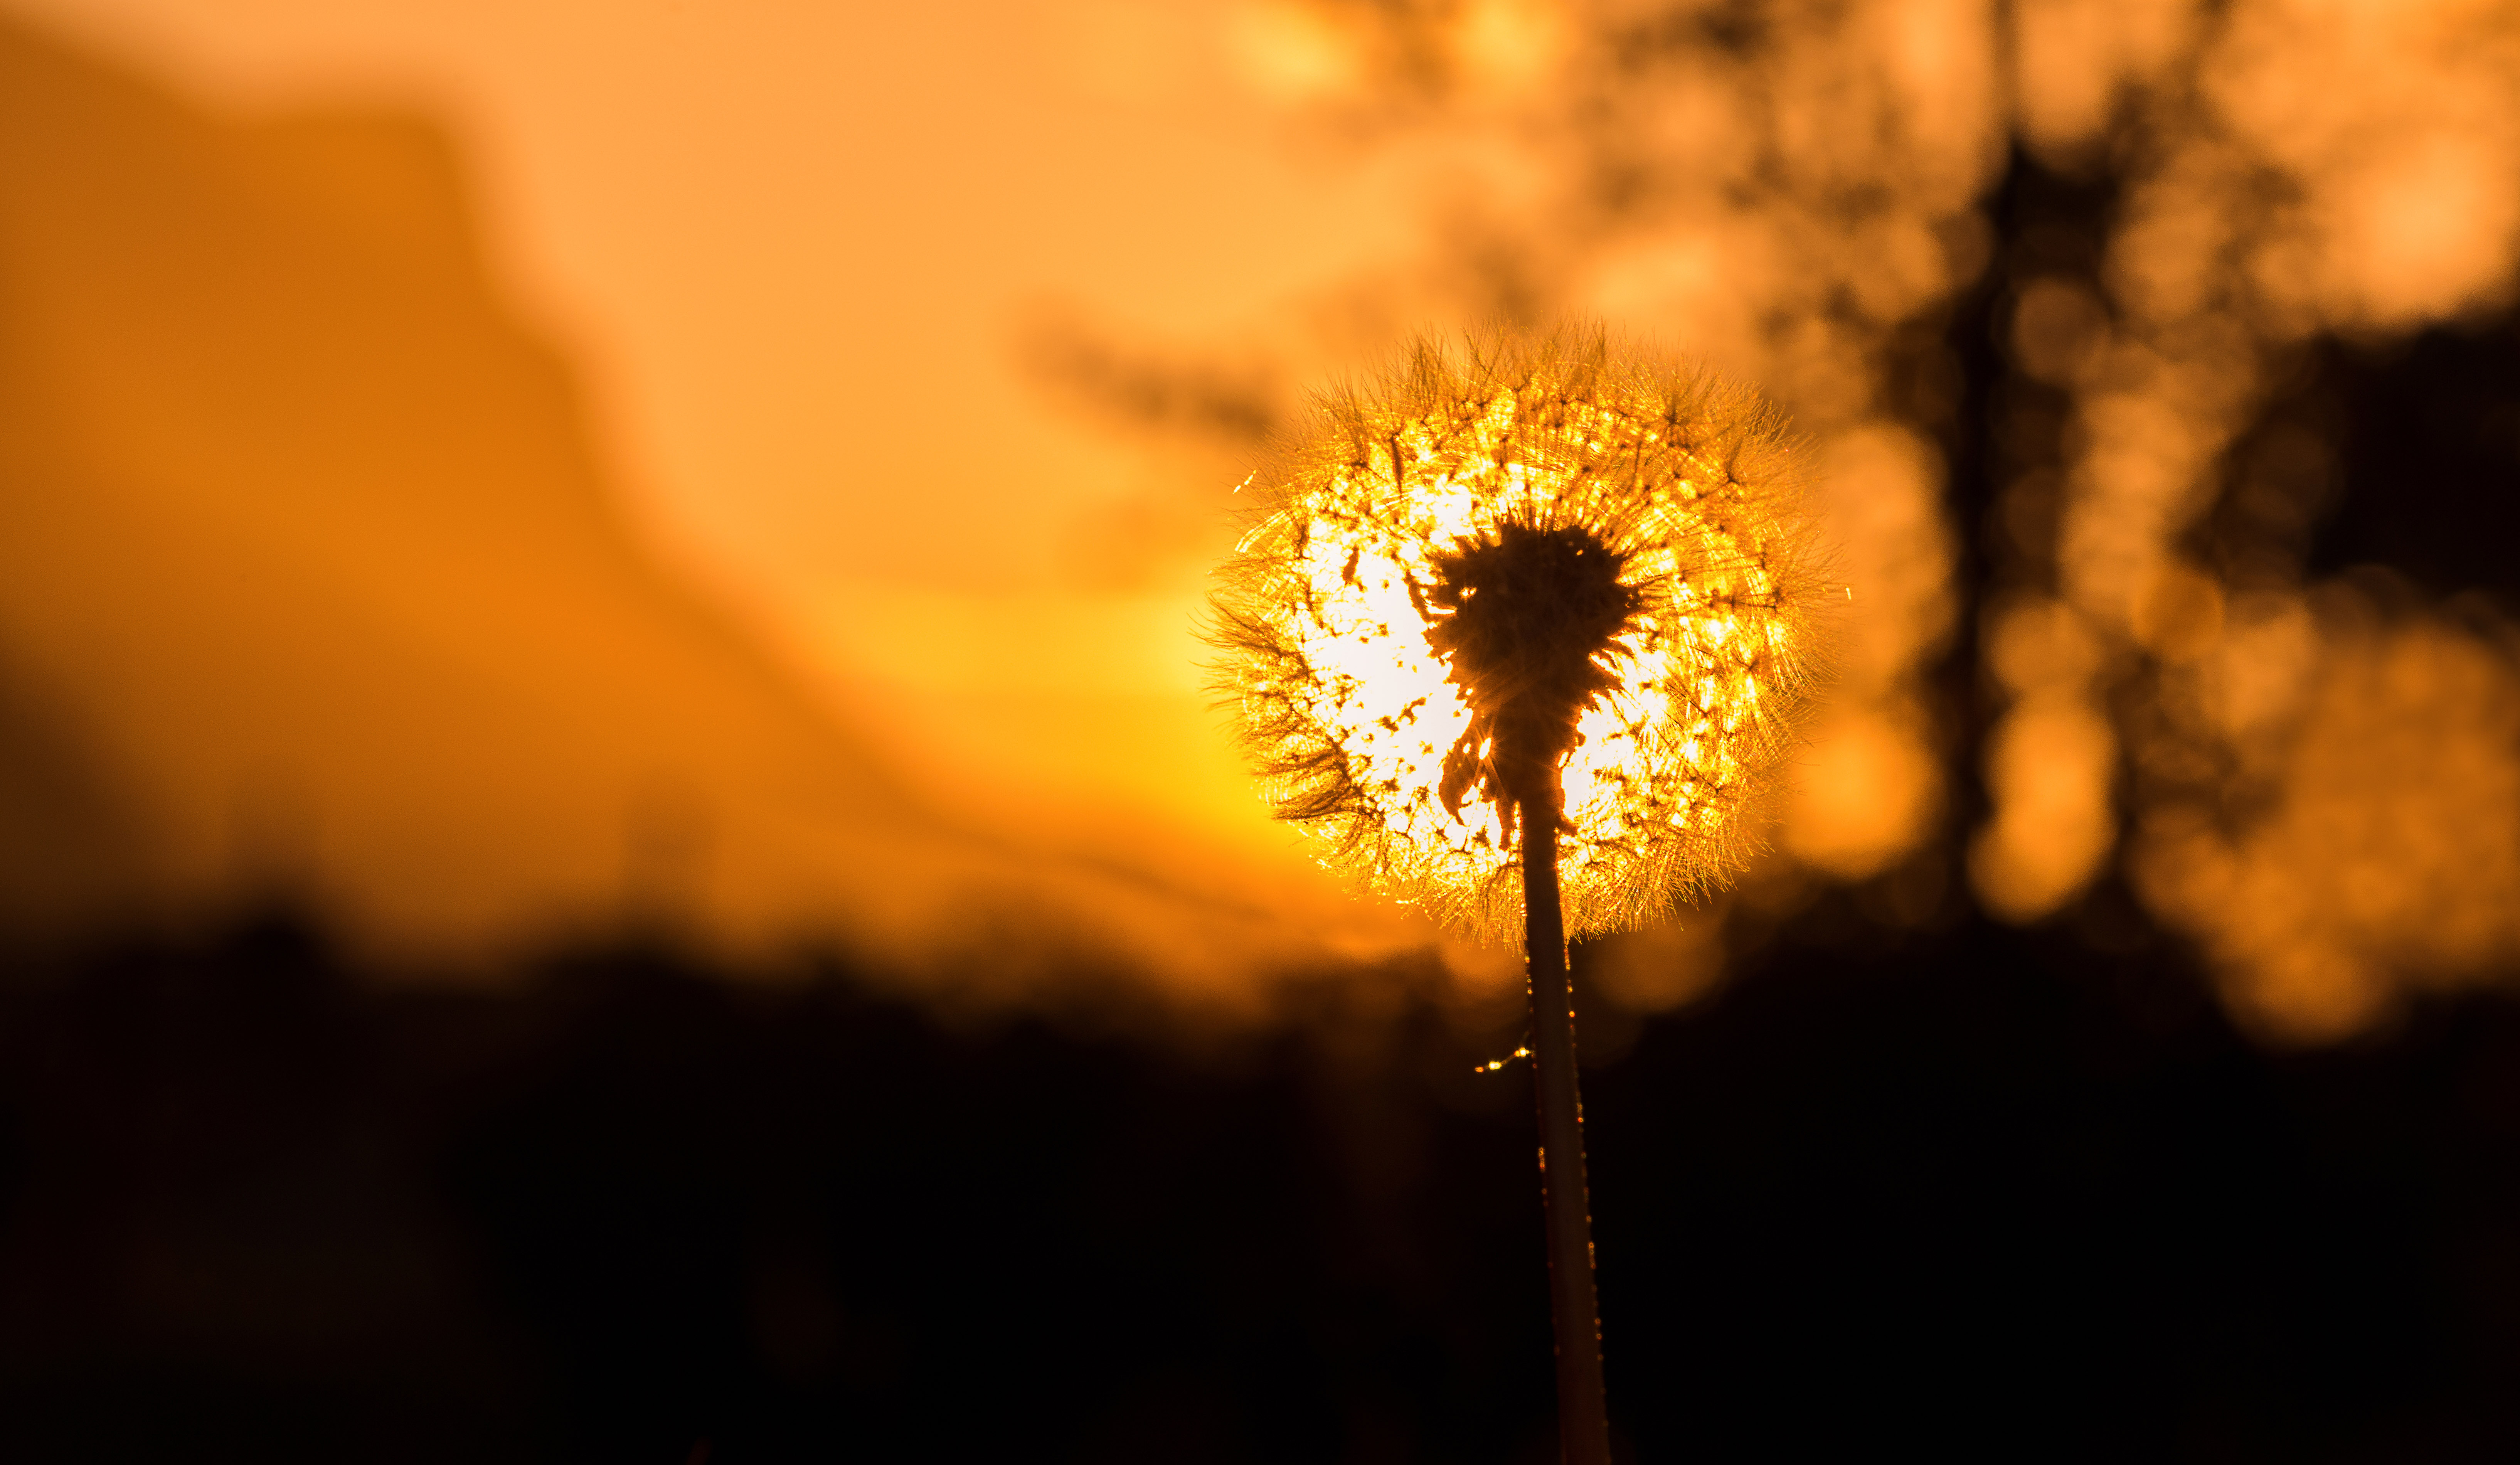 File:Dandelion in the setting sun.jpg - Wikimedia Commons